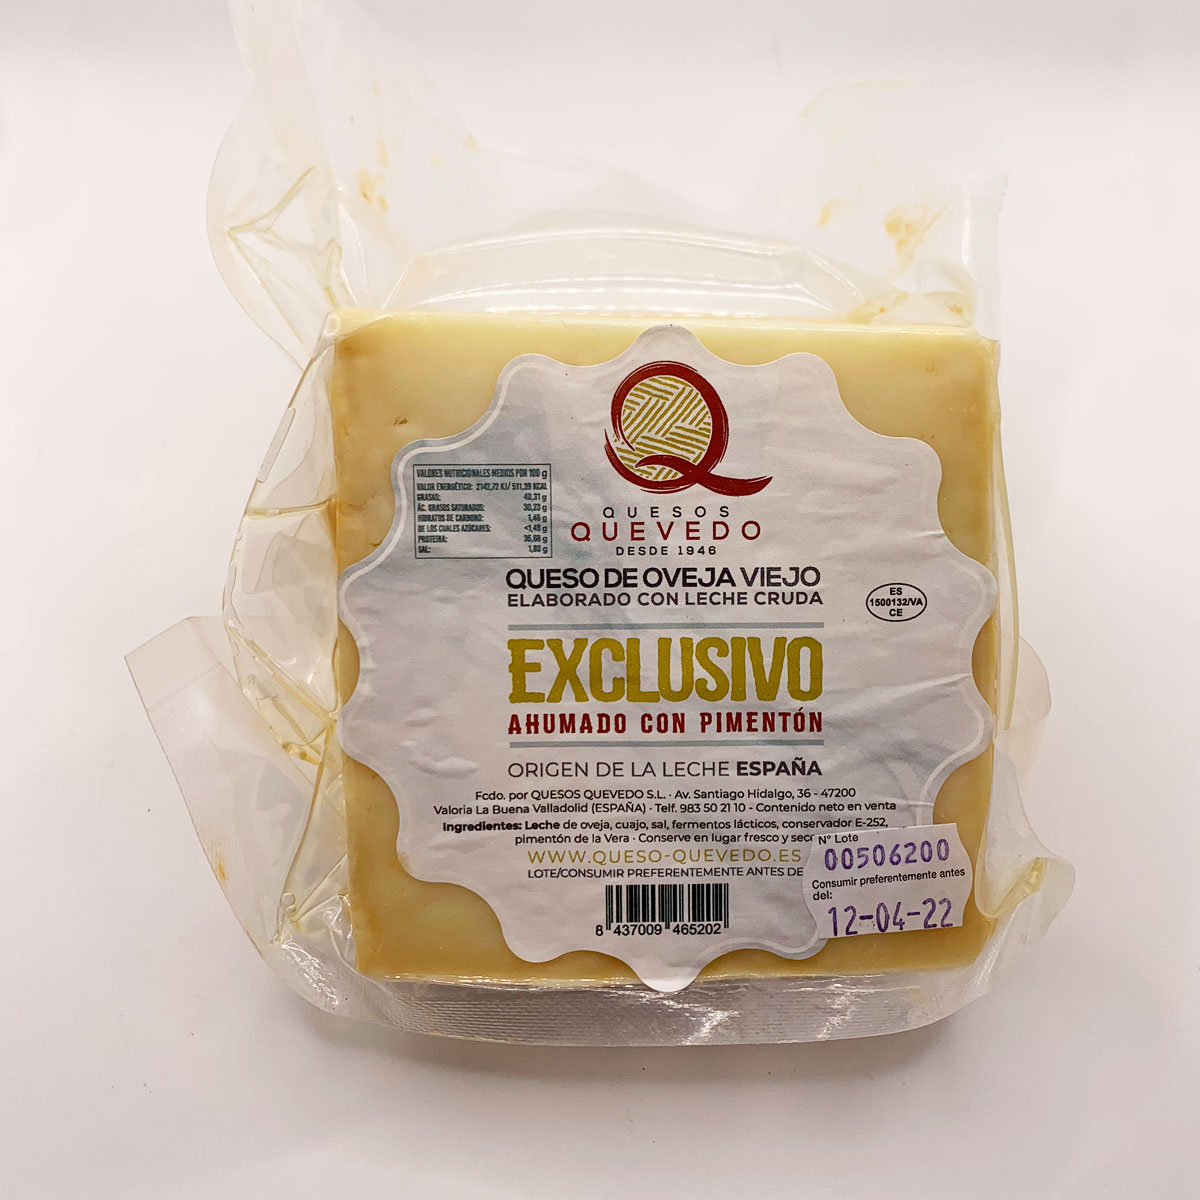 Exclusive Quevedo cheese wedge